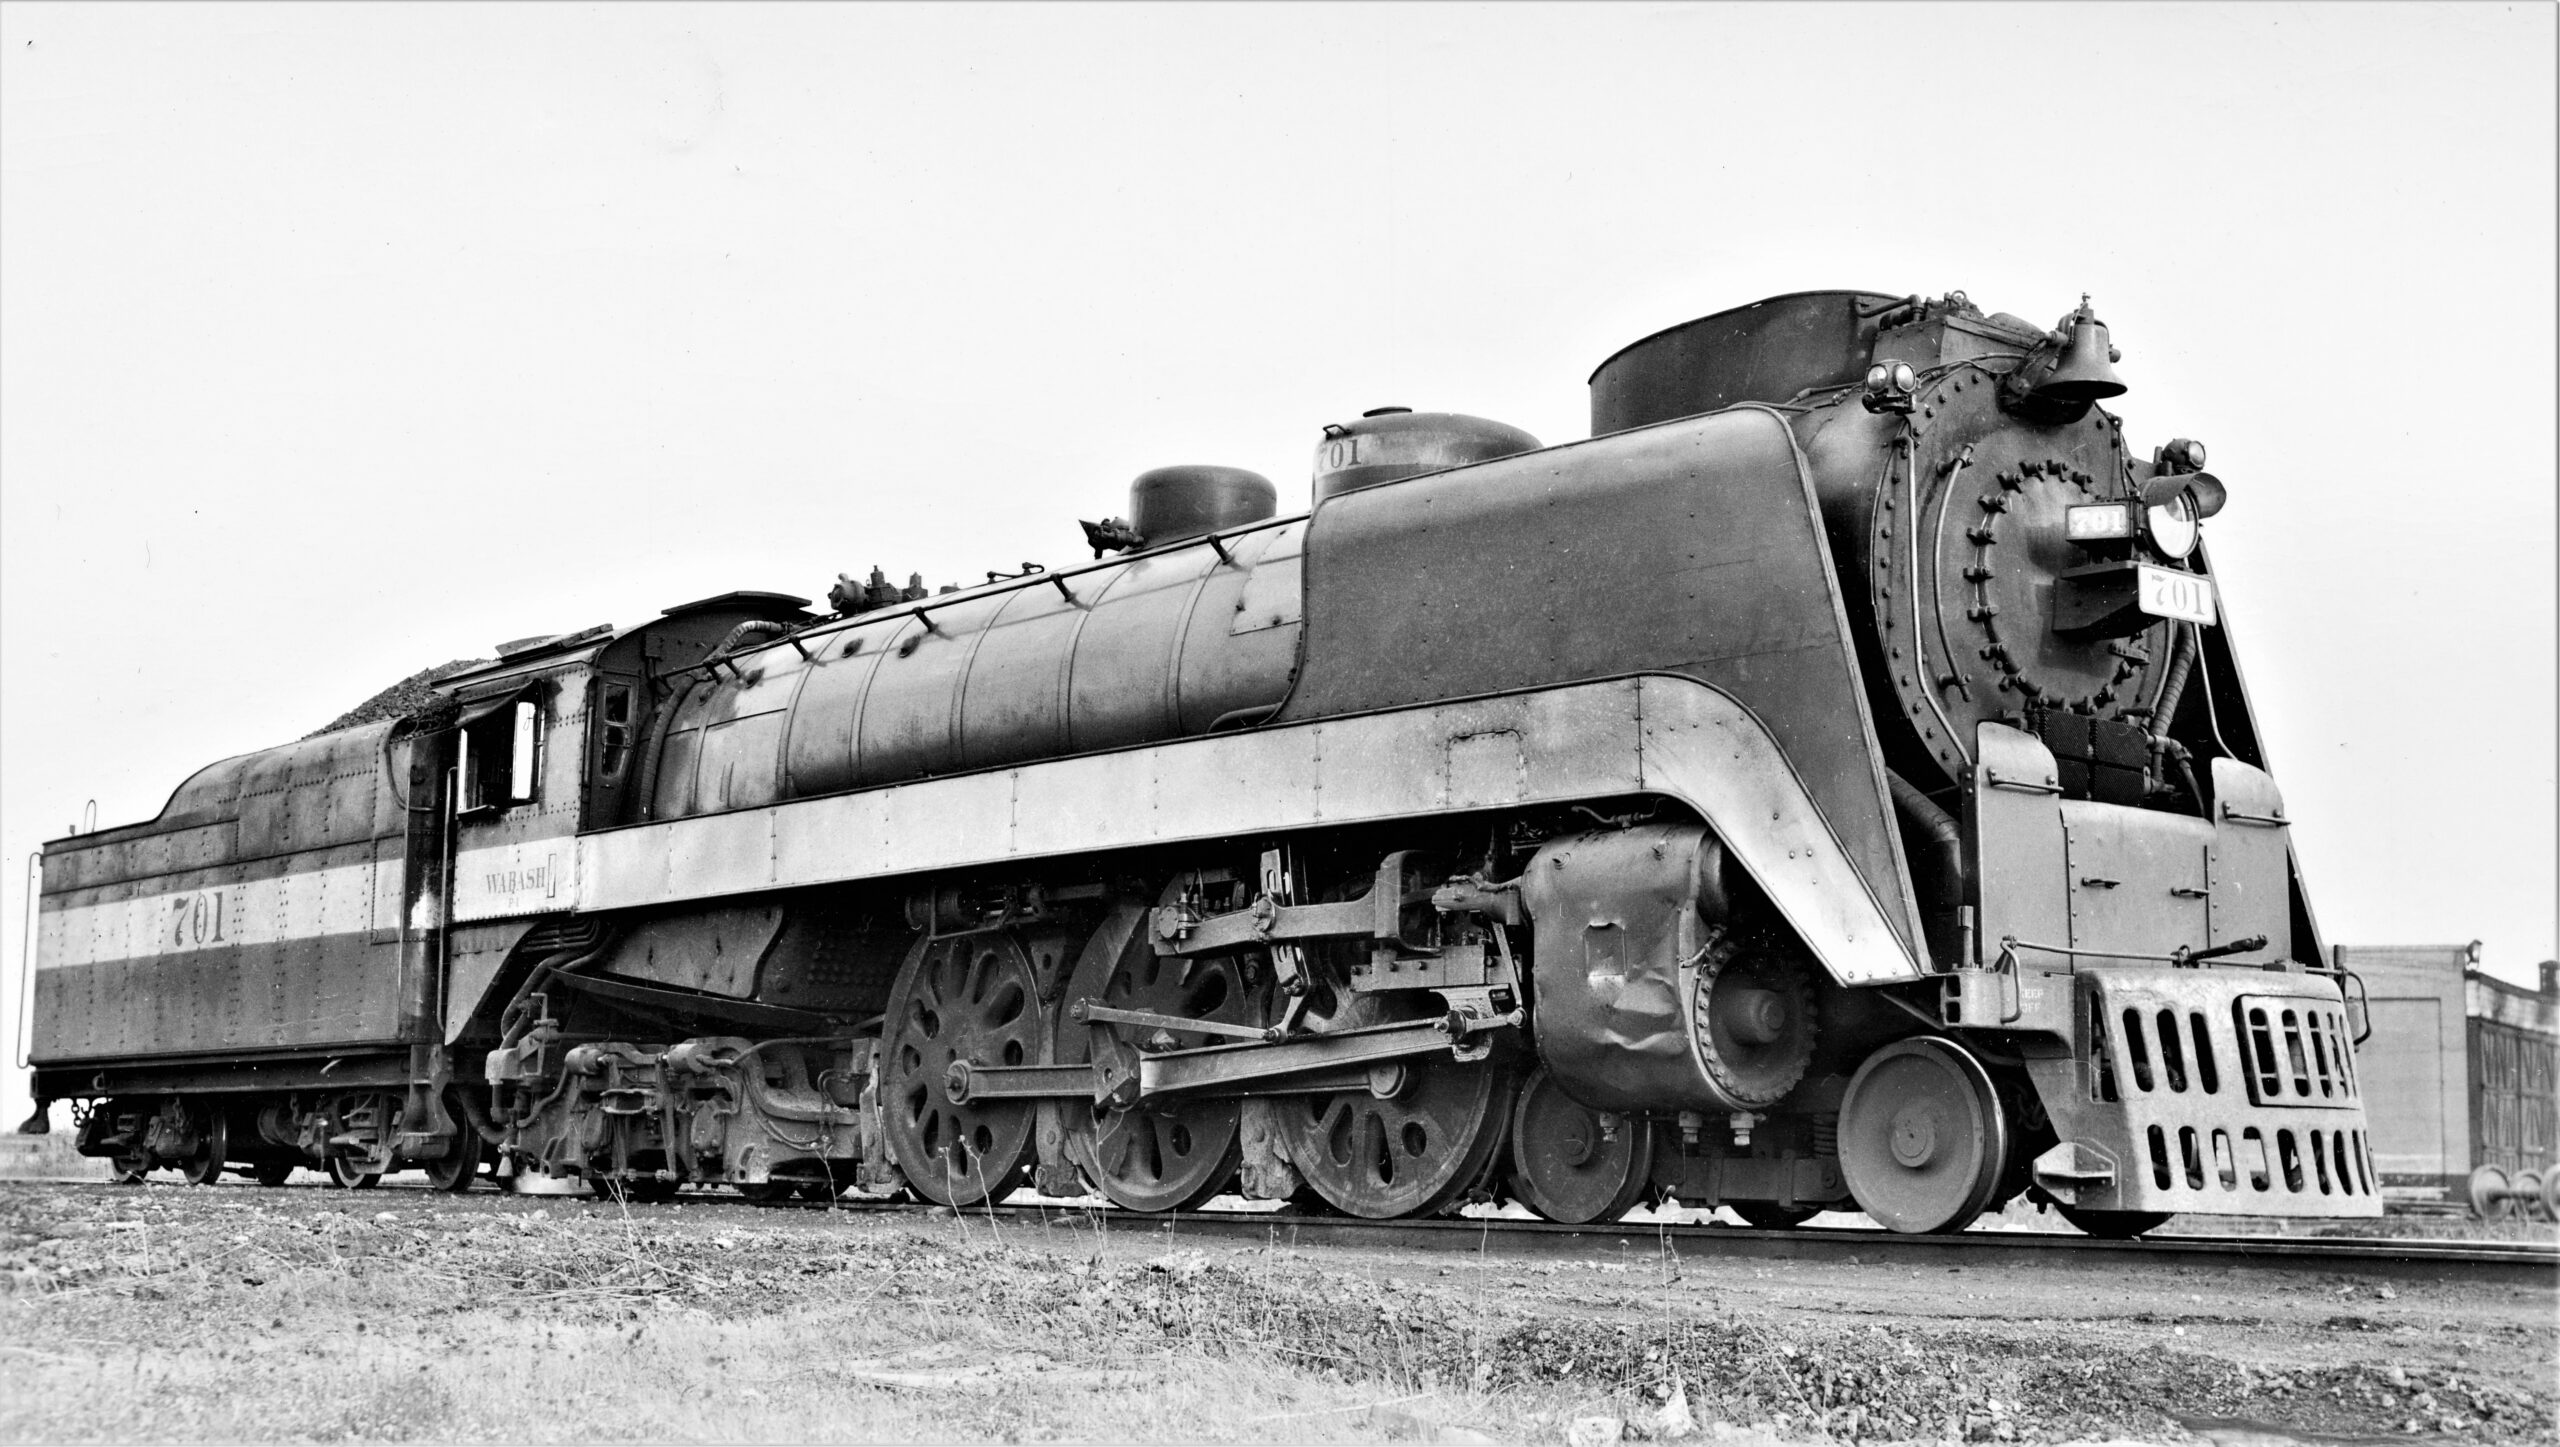 Wabash Railroad | Chicago, Illinois | Class P-1 4-6-4 #701 “Hudson” steam locomotive | November 8, 1948 | Robert P. Morris photograph | Elmer Kremkow collection